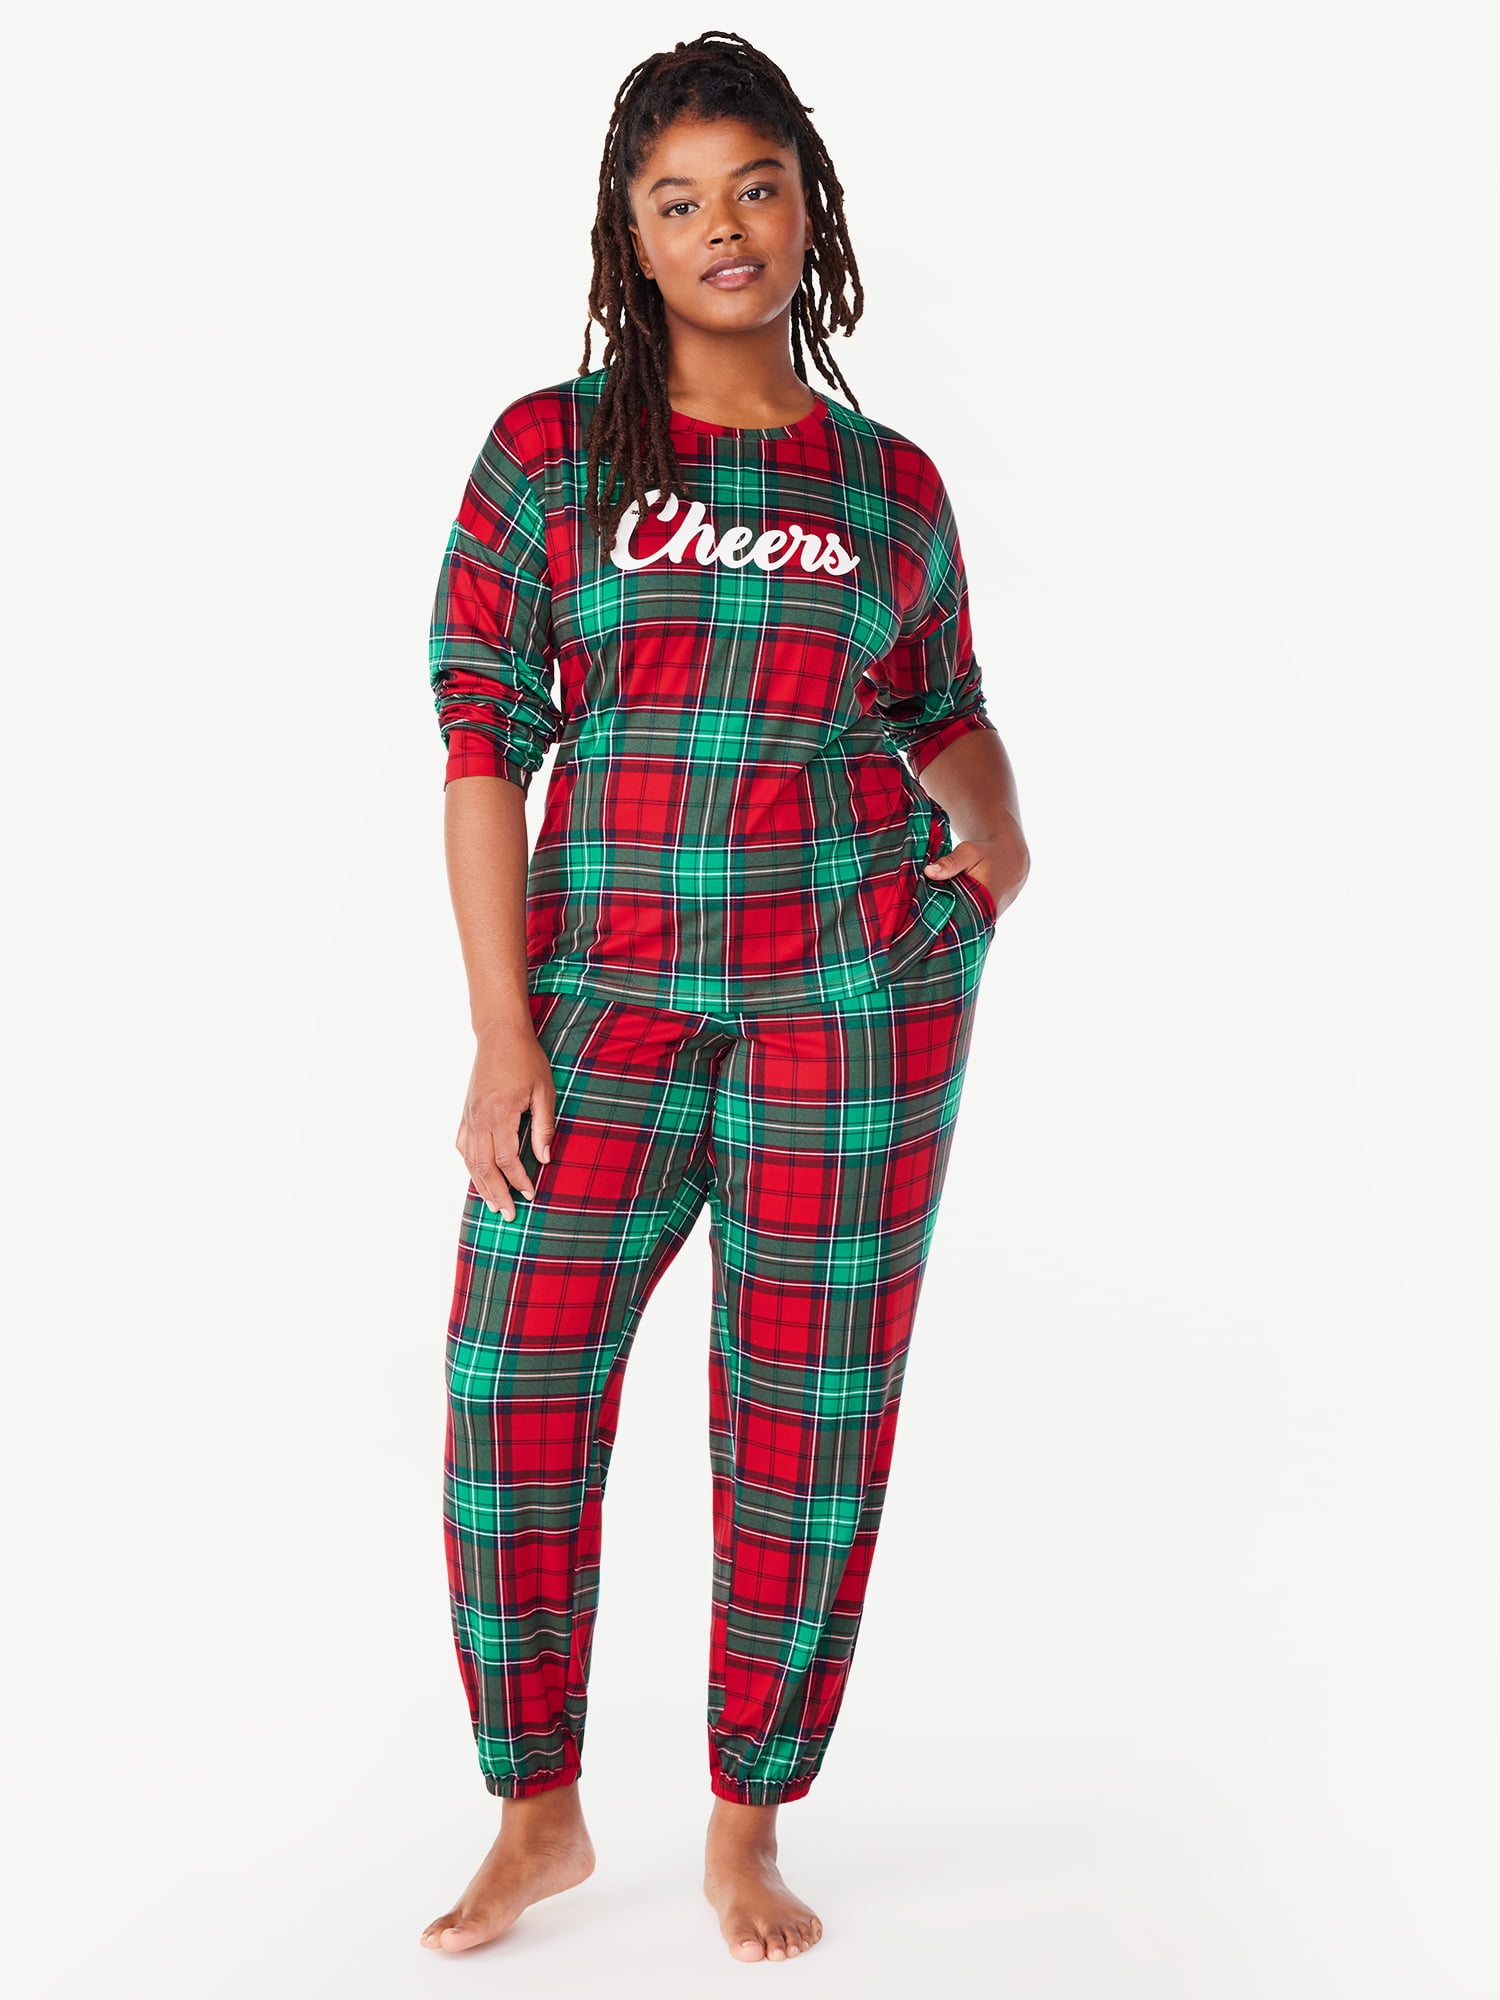 Joyspun Women's Long Sleeve Flannel Sleep Top and Pants Pajama Set